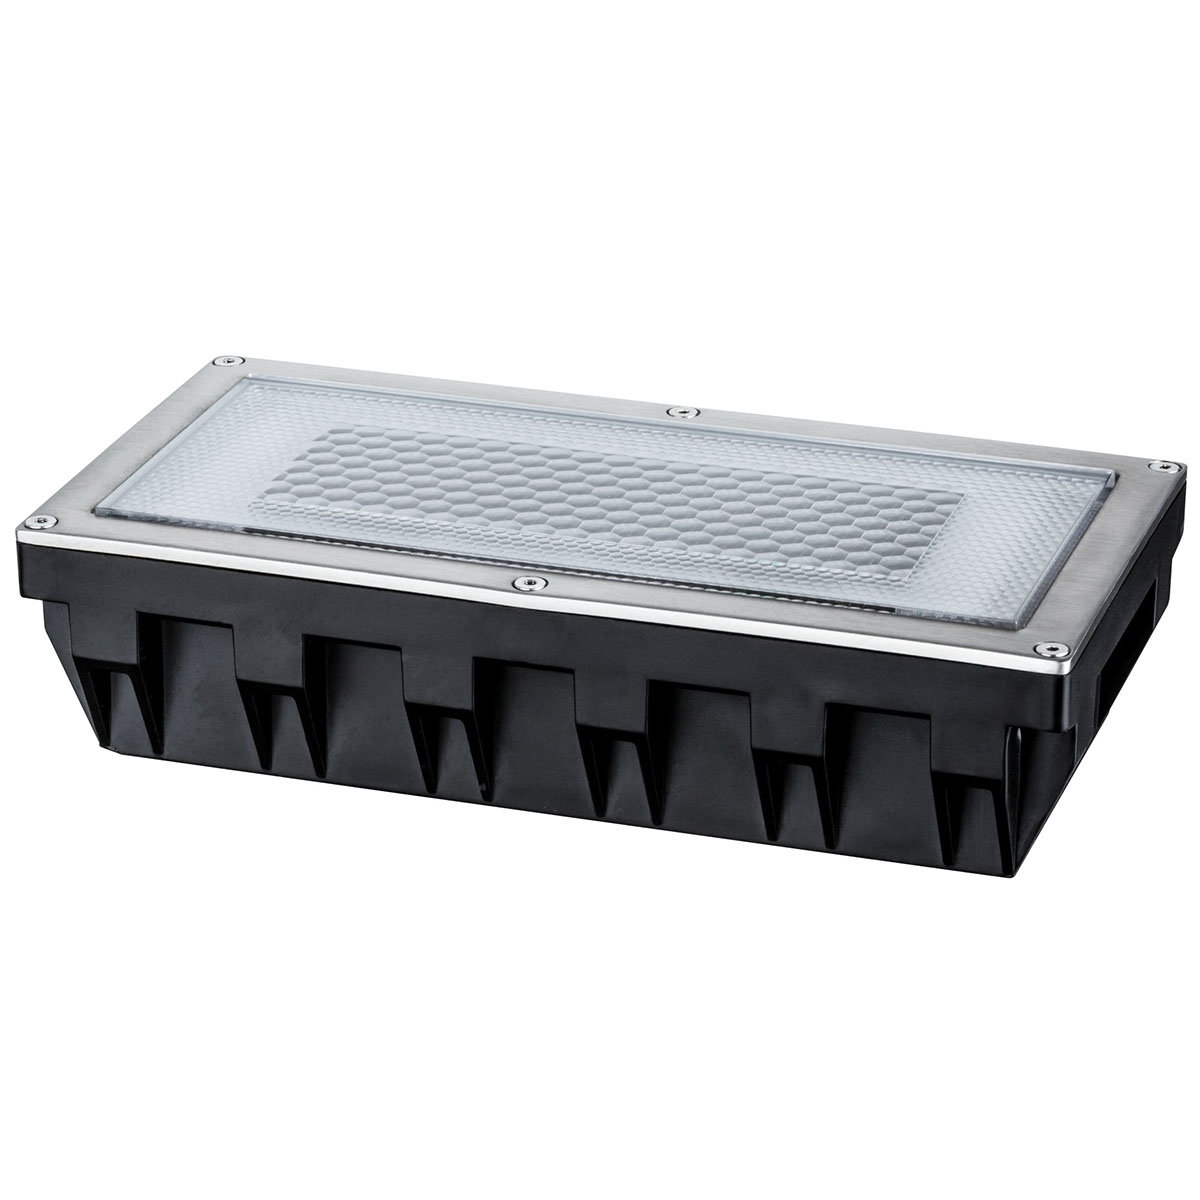 Solar LED Bodeneinbauleuchte special Box
| #2